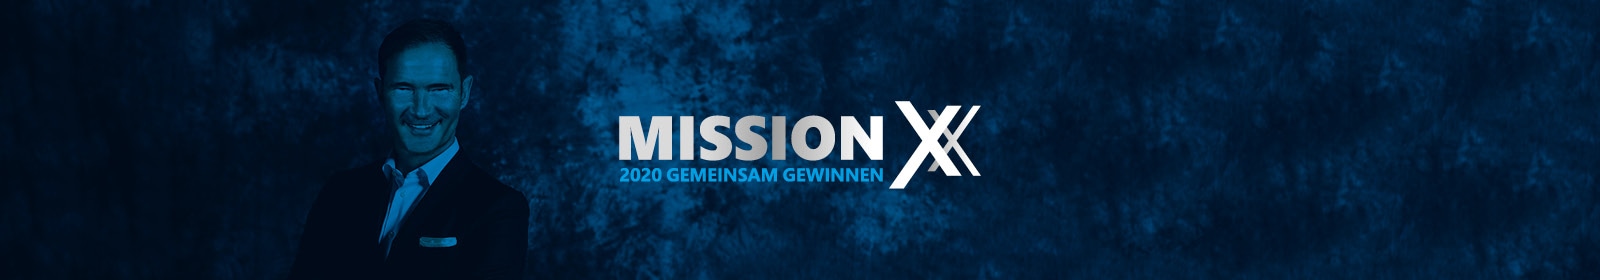 mission x